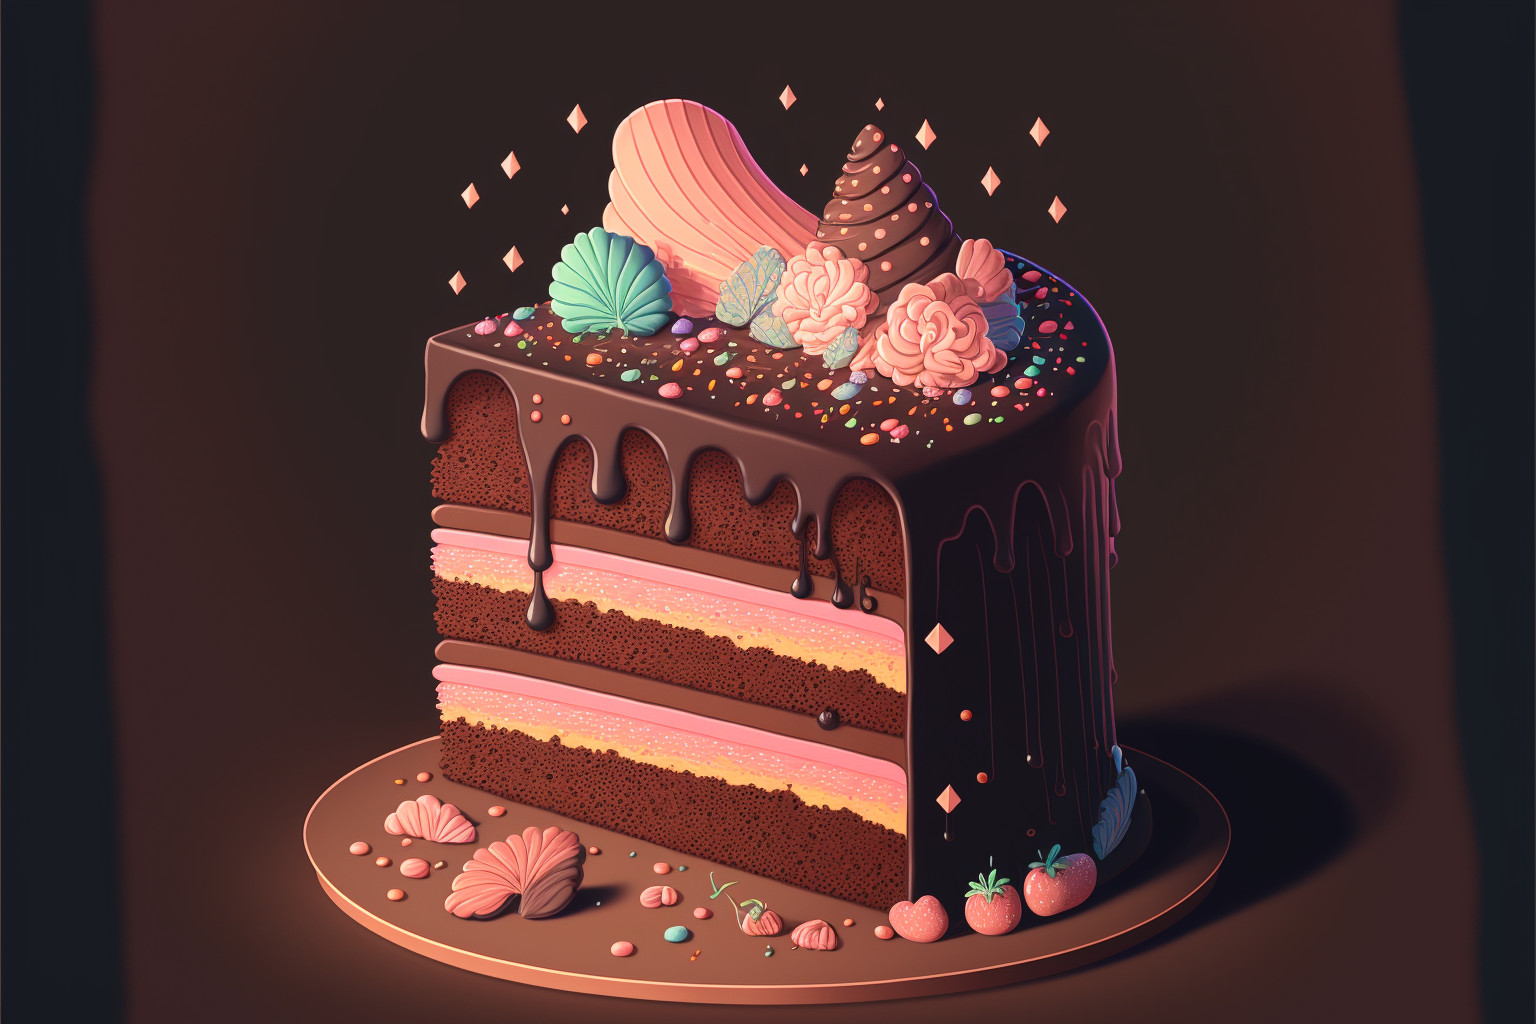 digital art of a chocolate cake